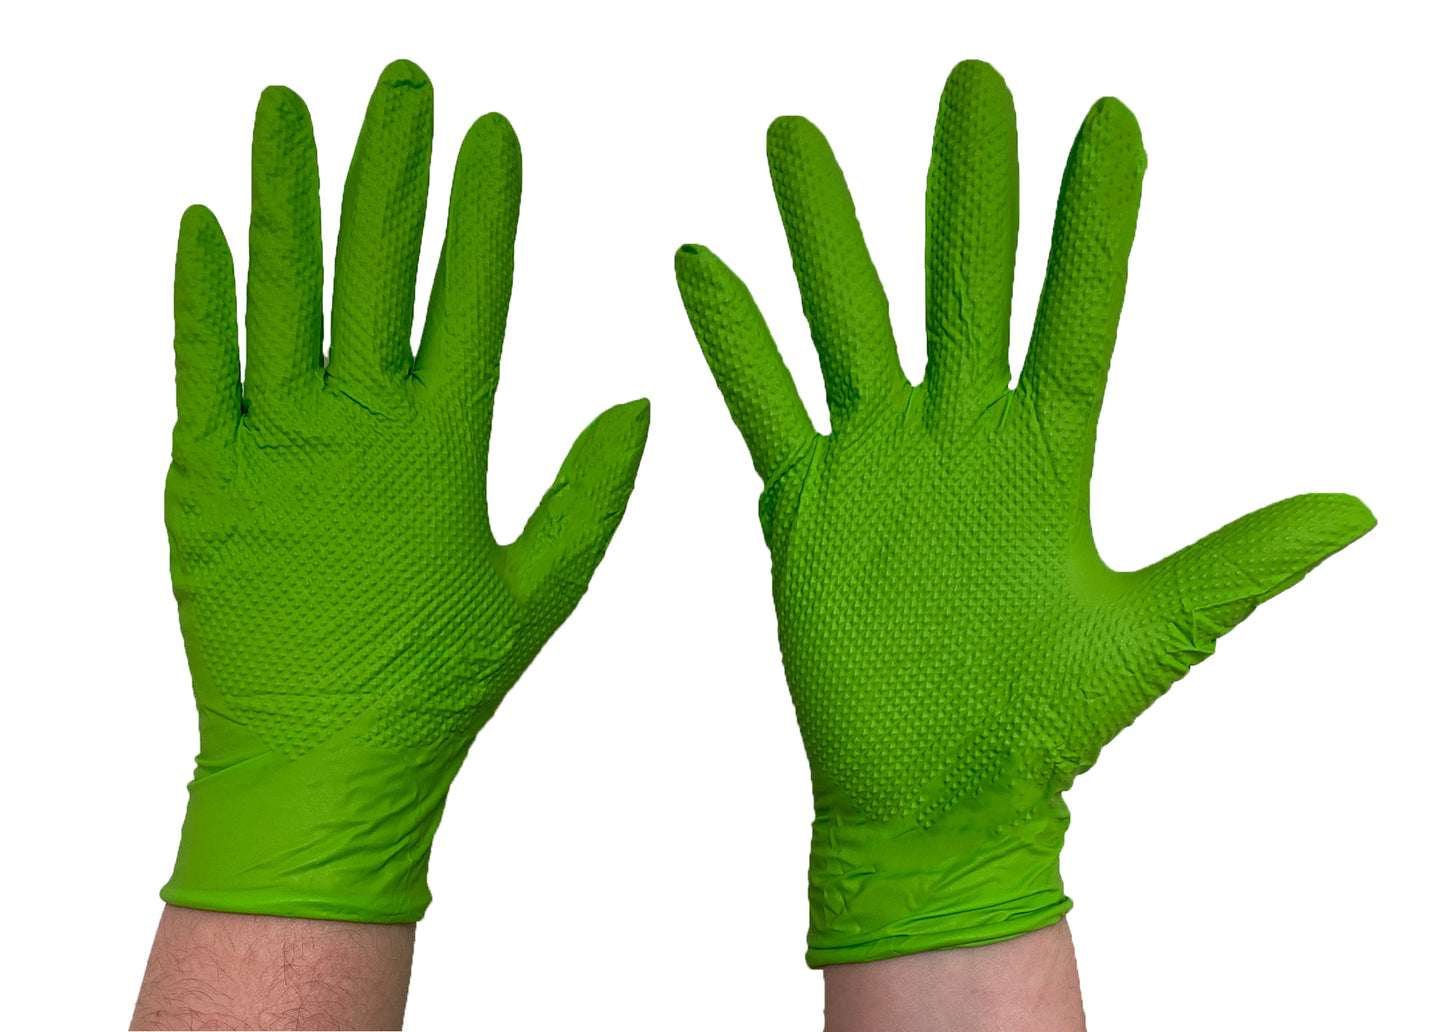 70004  The Green Diesel®, Powder Free Nitrile Disposable Gloves, 8 Mil, Sizes M-XXL